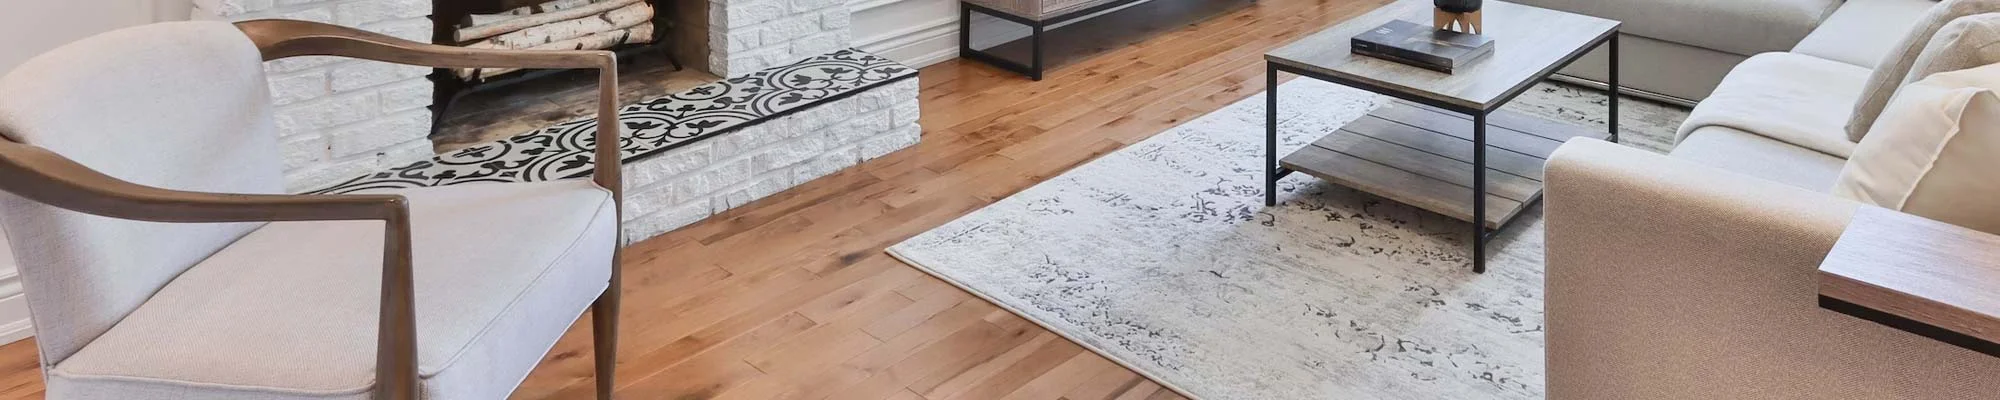 View Shay's Carpet's Flooring Product Catalog